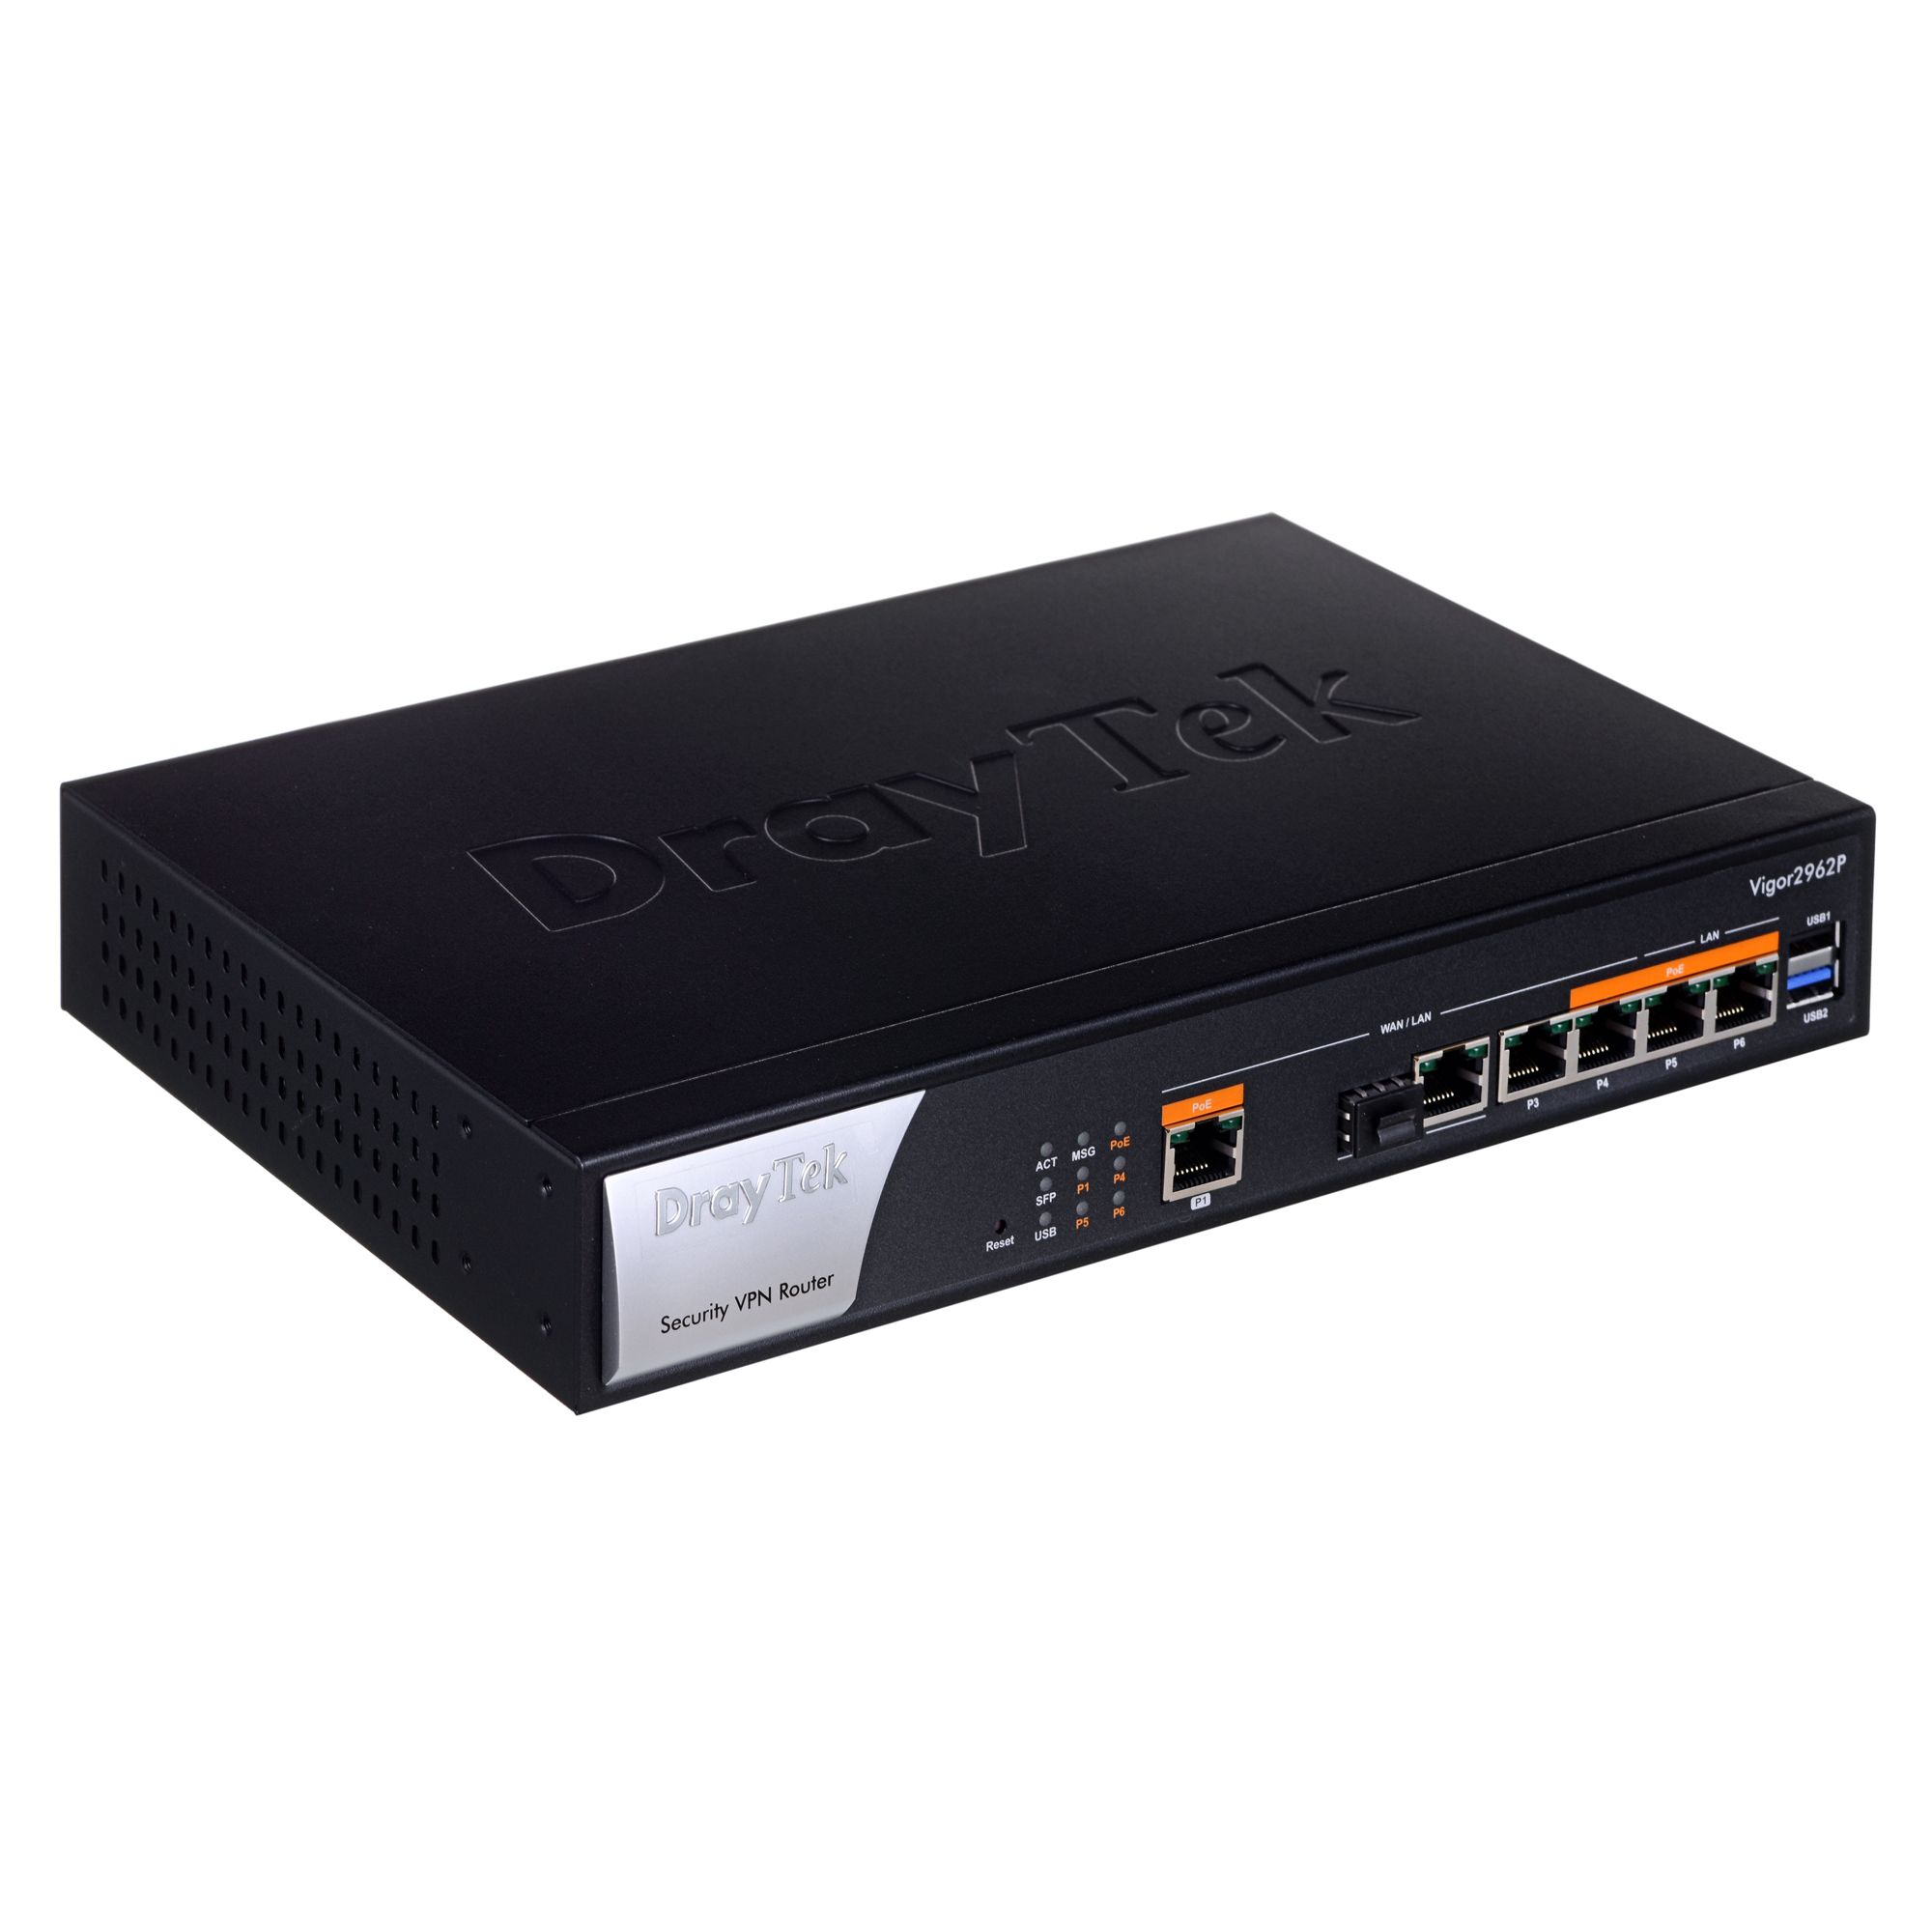 Router DrayTek Vigor 2962P, 4 WAN/LAN, SFP/GbE combo, balancing/failover_1